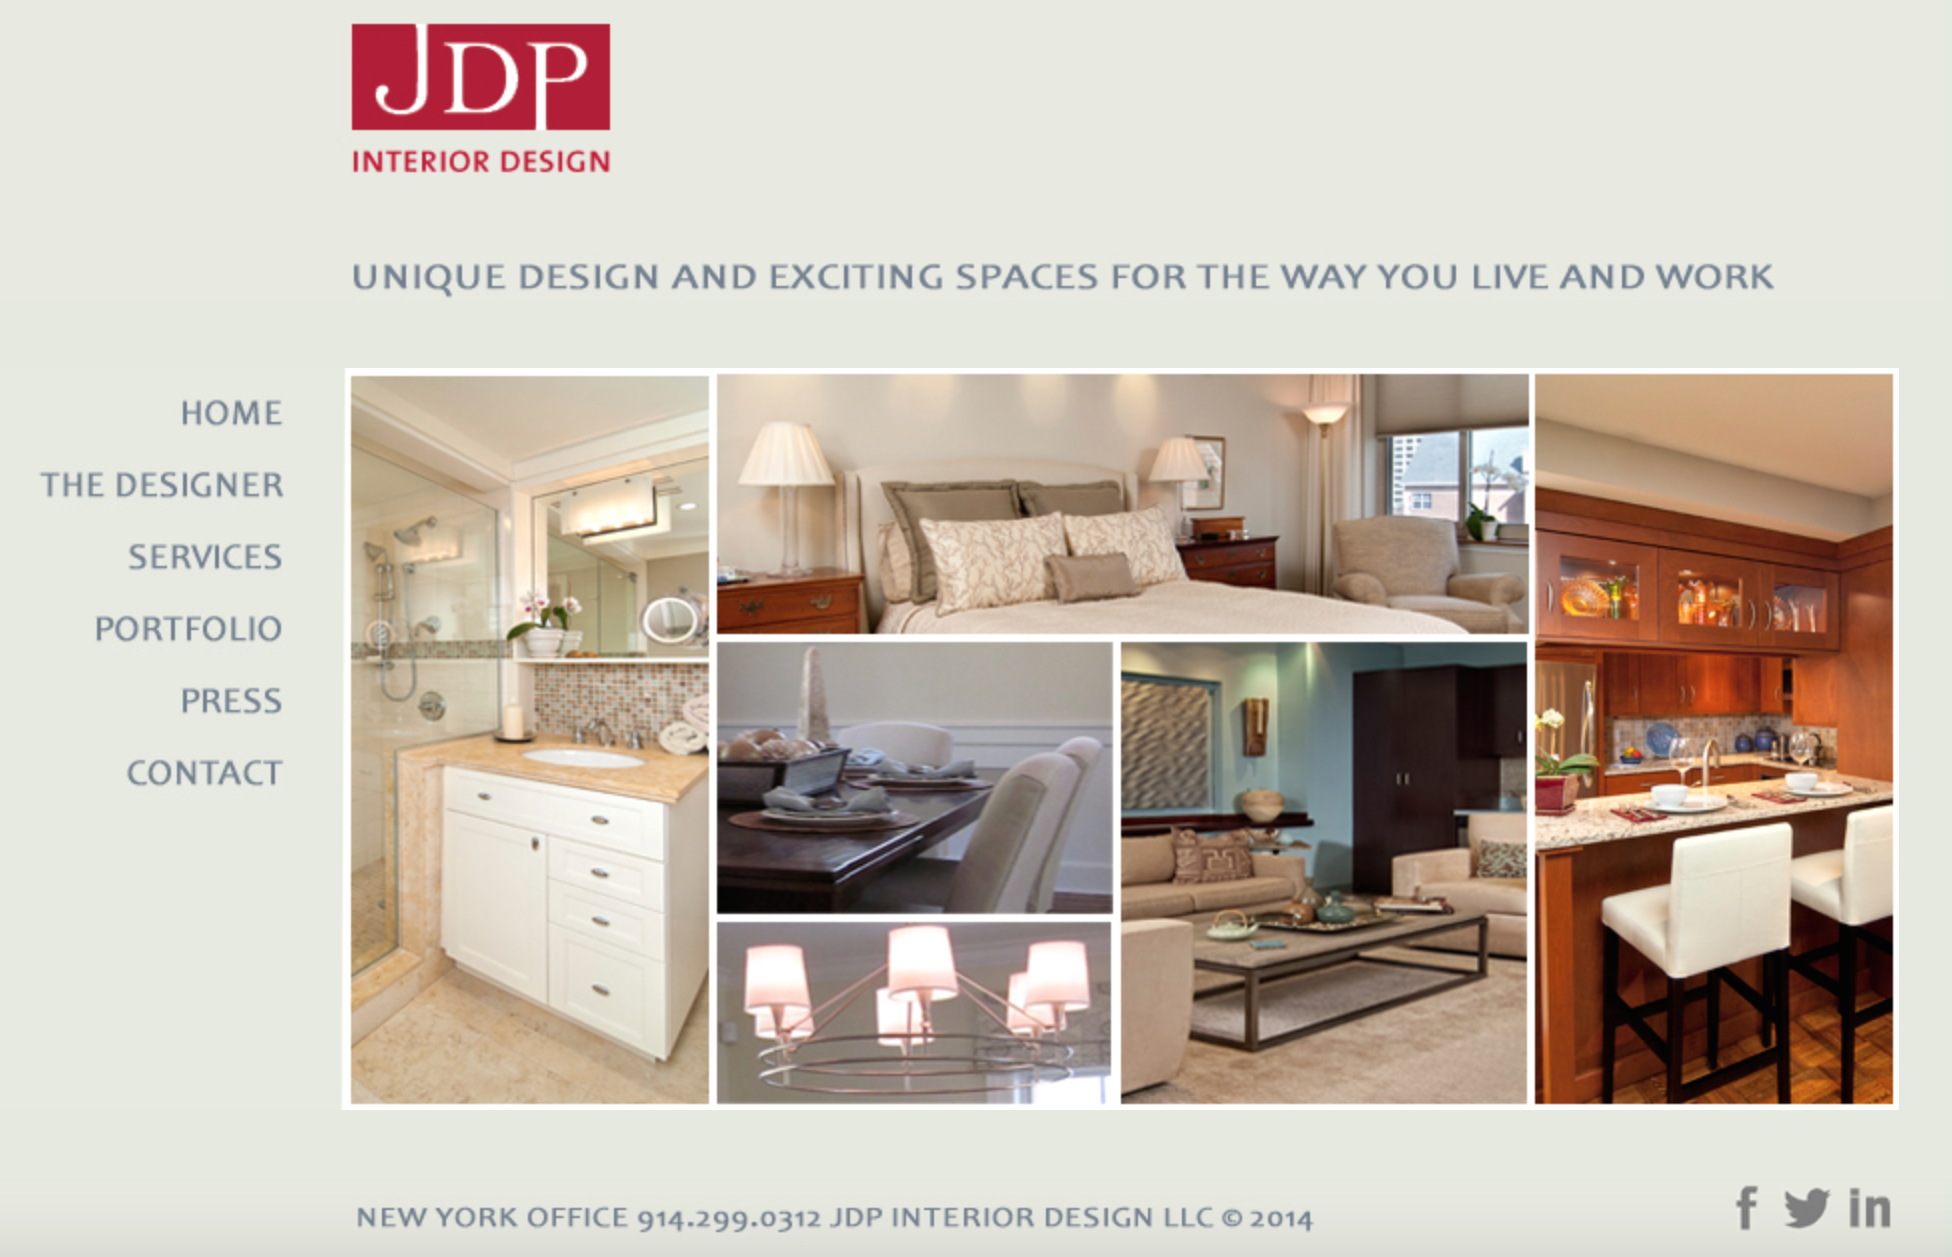 JDP Interior Design